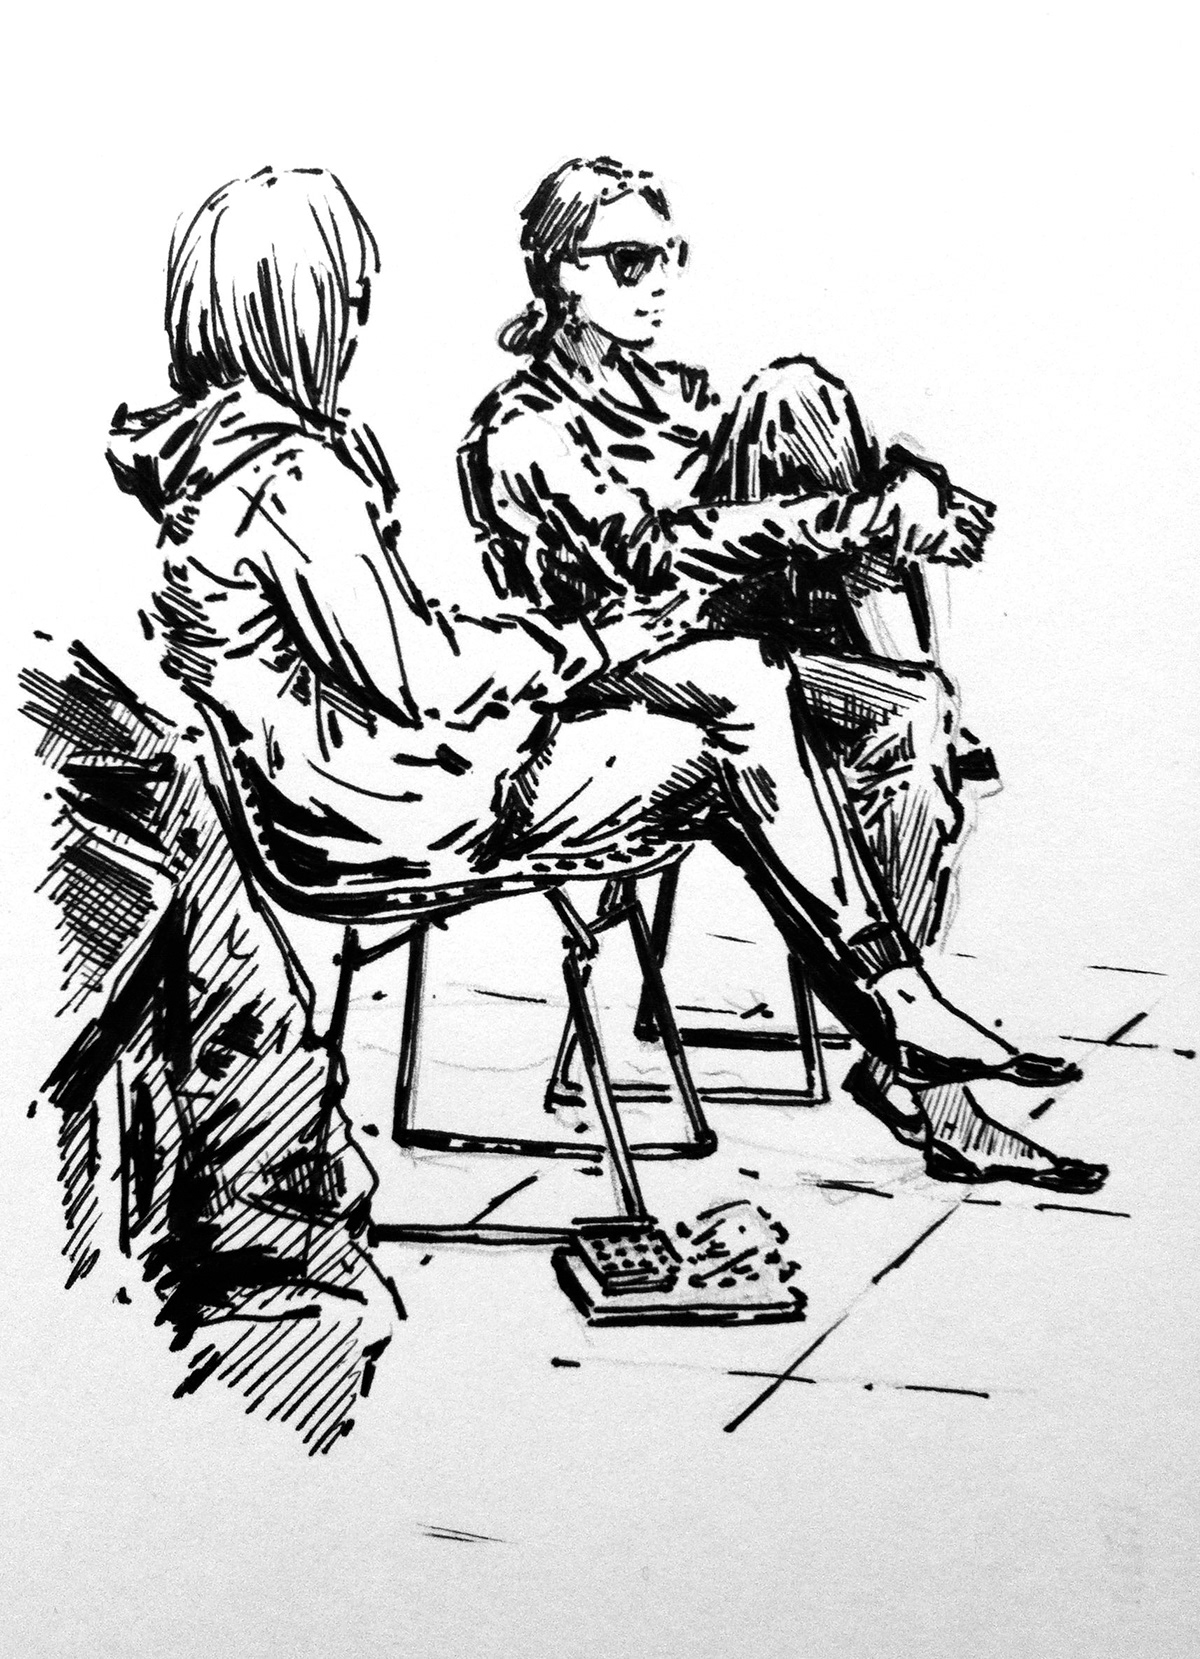 London black and white Street ink sketch sketching freehand pen sketchbook line drawing